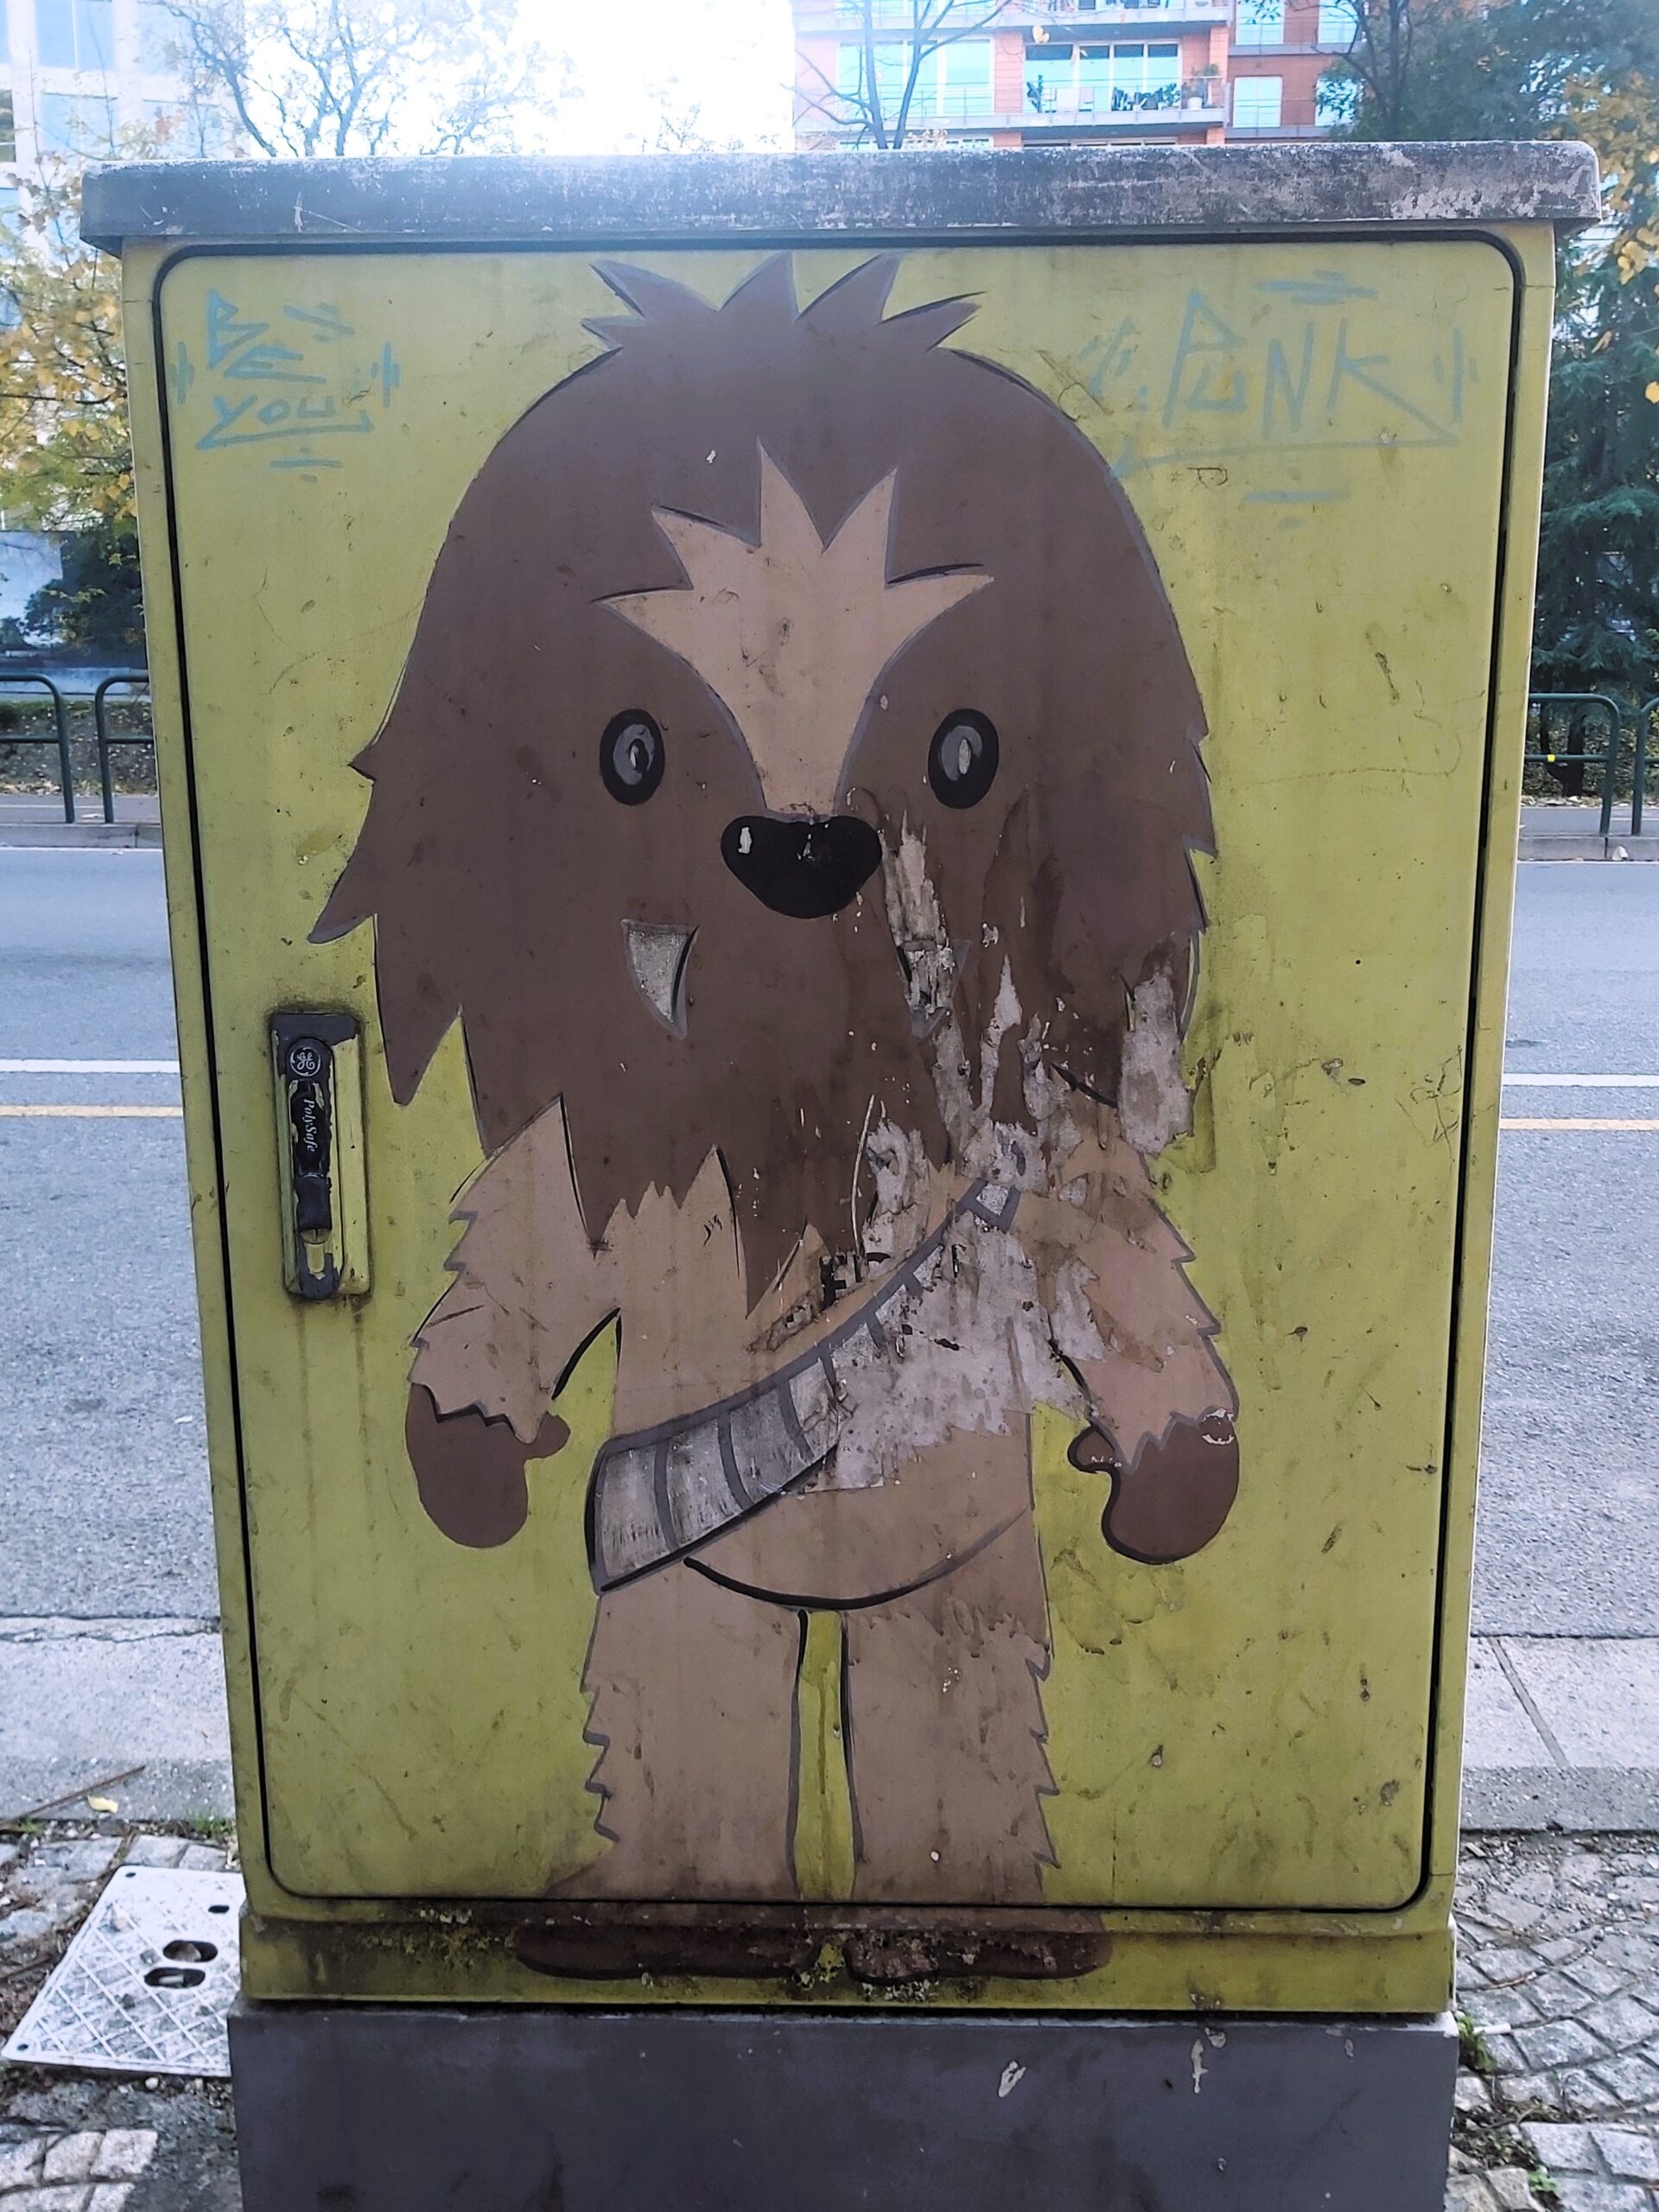 A Chewbacca graffiti on an utilities box in Tirana, Albania